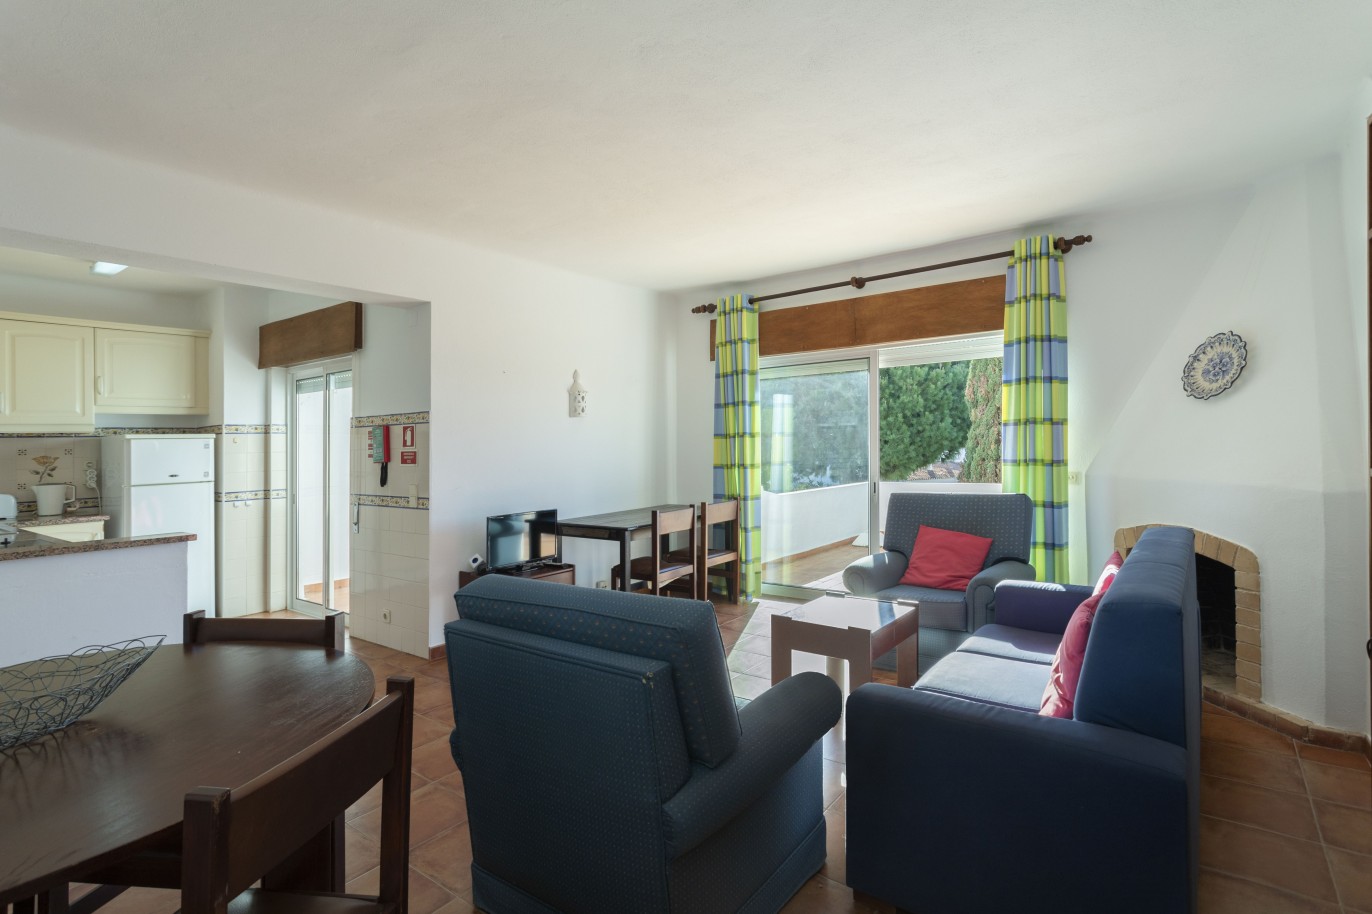 2-bedroom Apartment Duplex, sea view, for sale in Porches, Algarve_247751